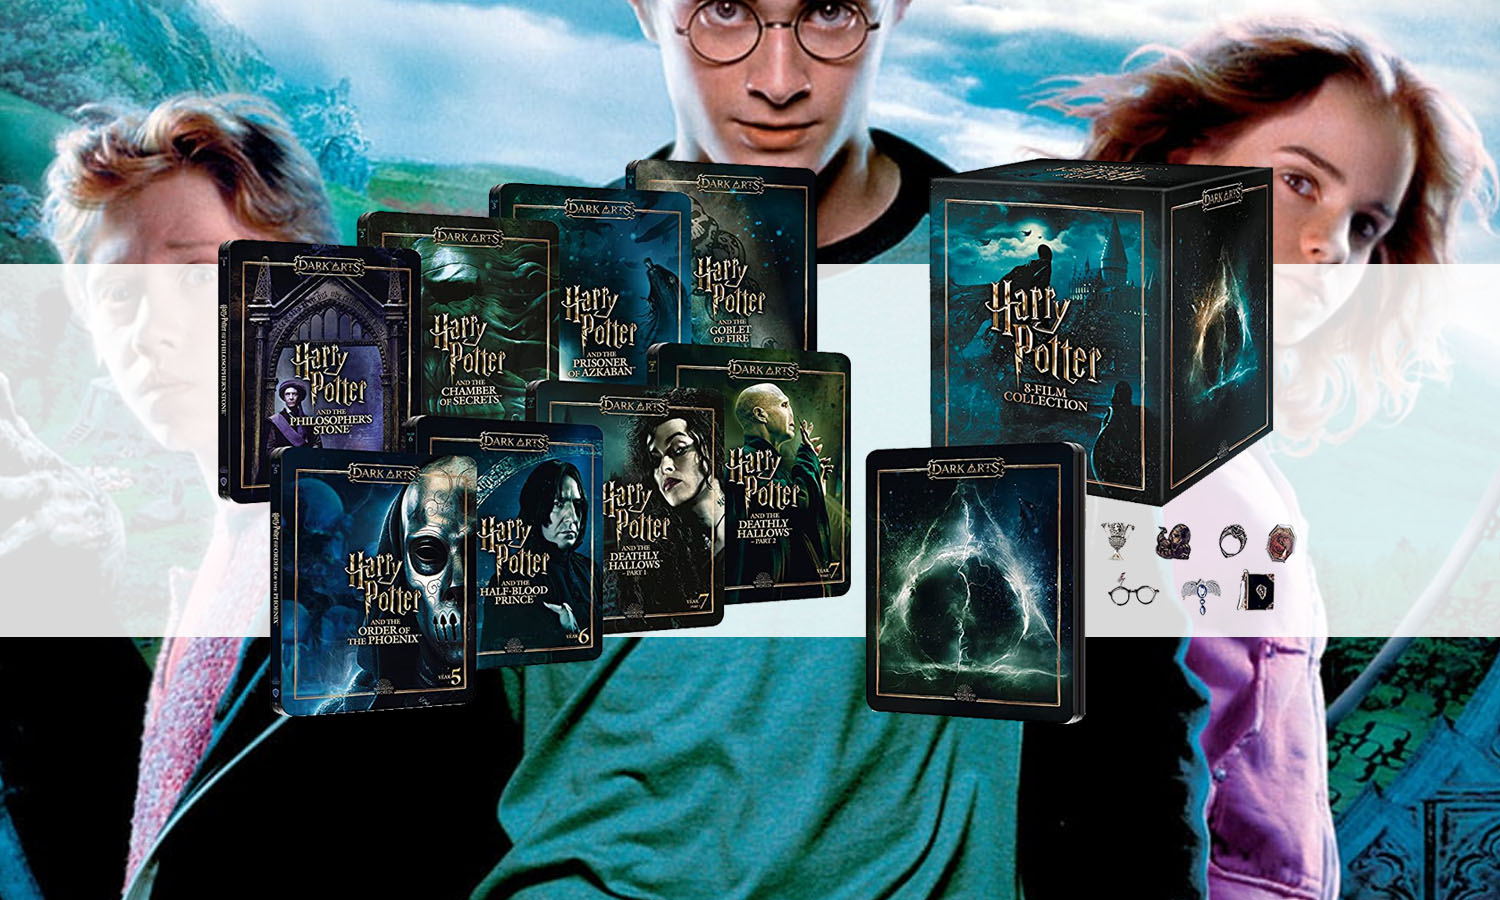 Coffret Harry Potter Intégrale Steelbook Collector Blu-ray